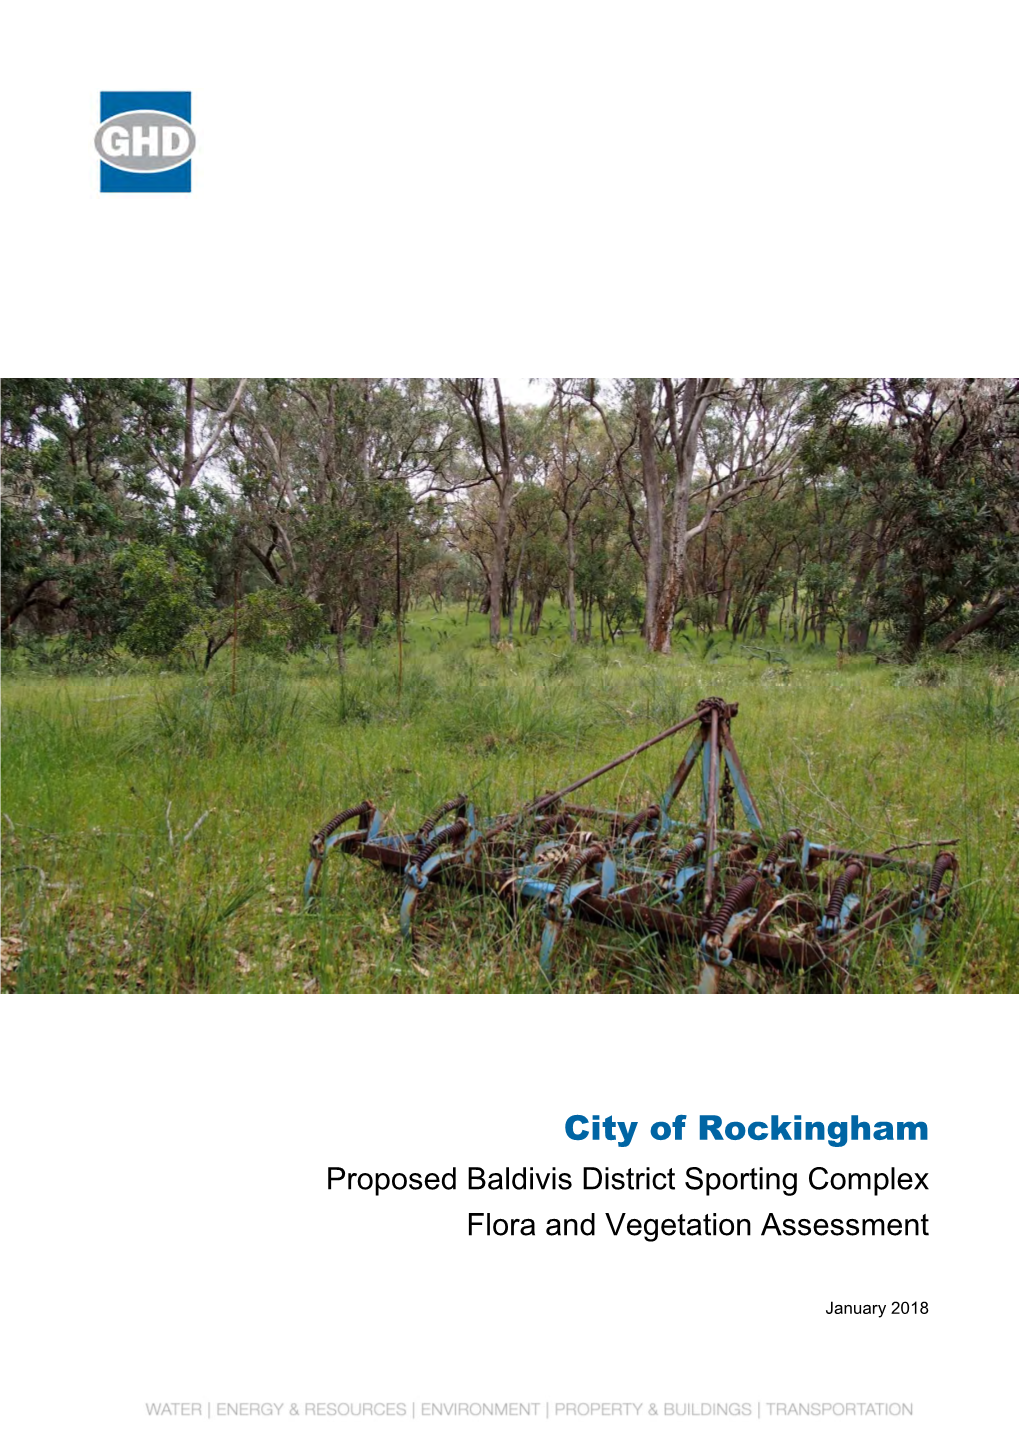 City of Rockingham Proposed Baldivis District Sporting Complex Flora and Vegetation Assessment